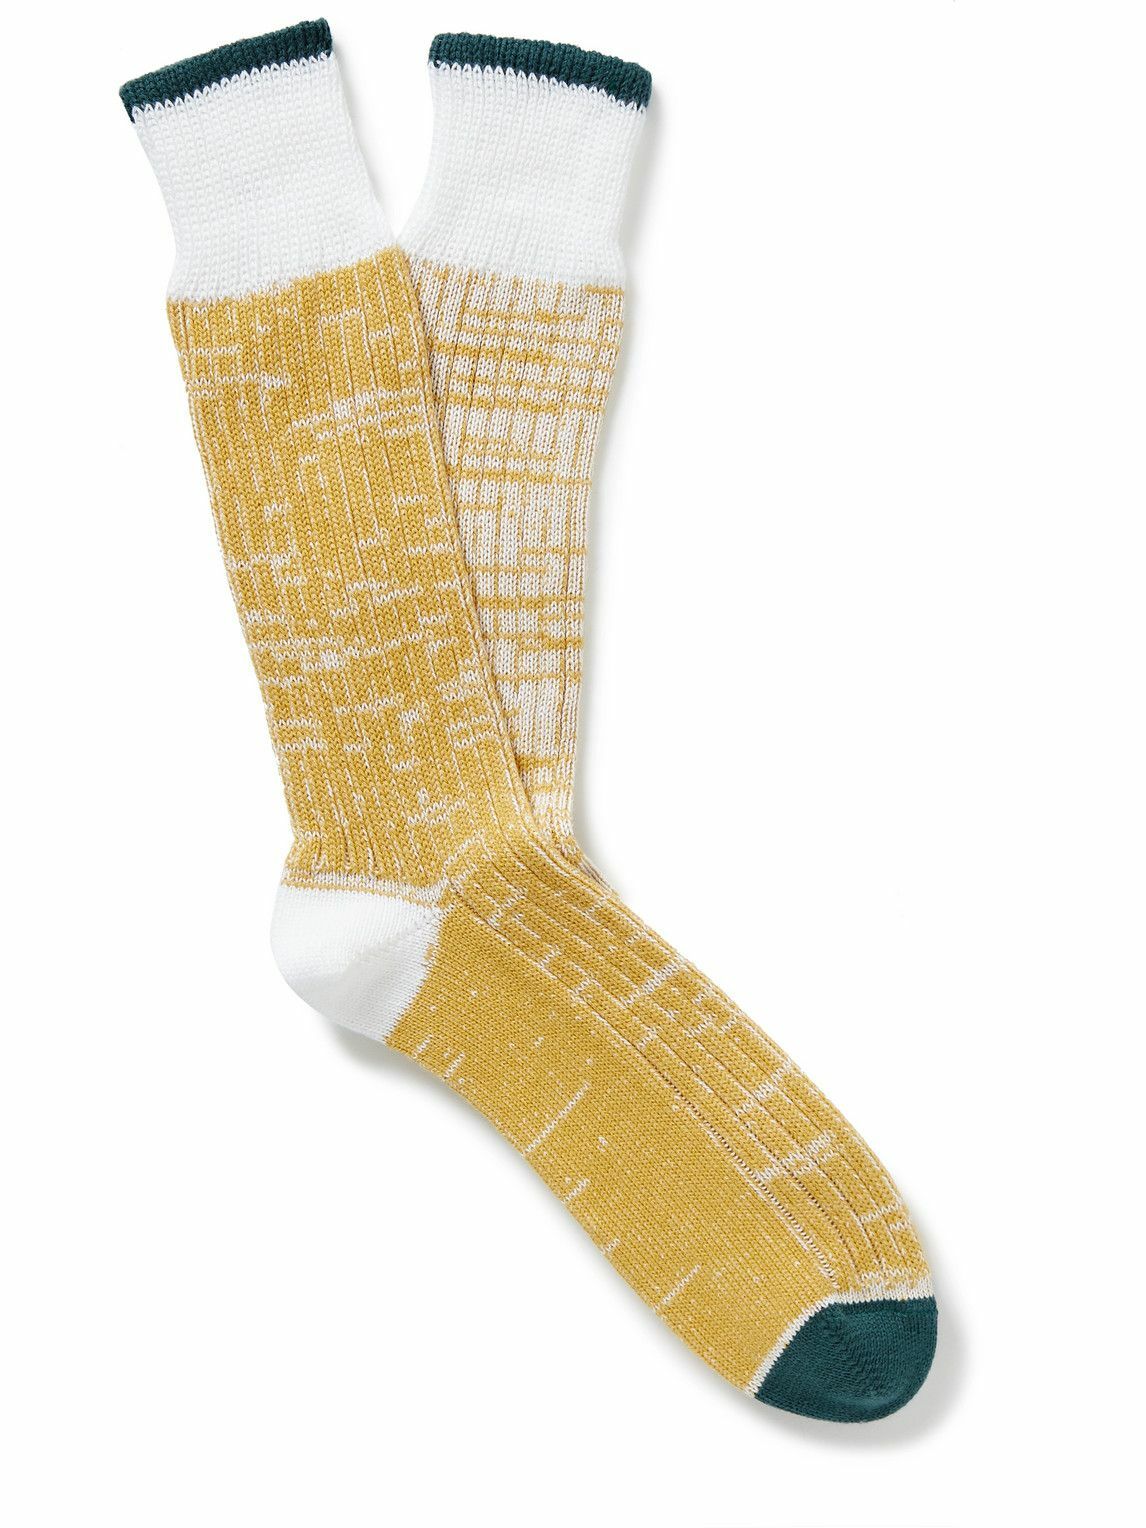 Corgi - Space-Dyed Ribbed Cotton Socks - Yellow Corgi